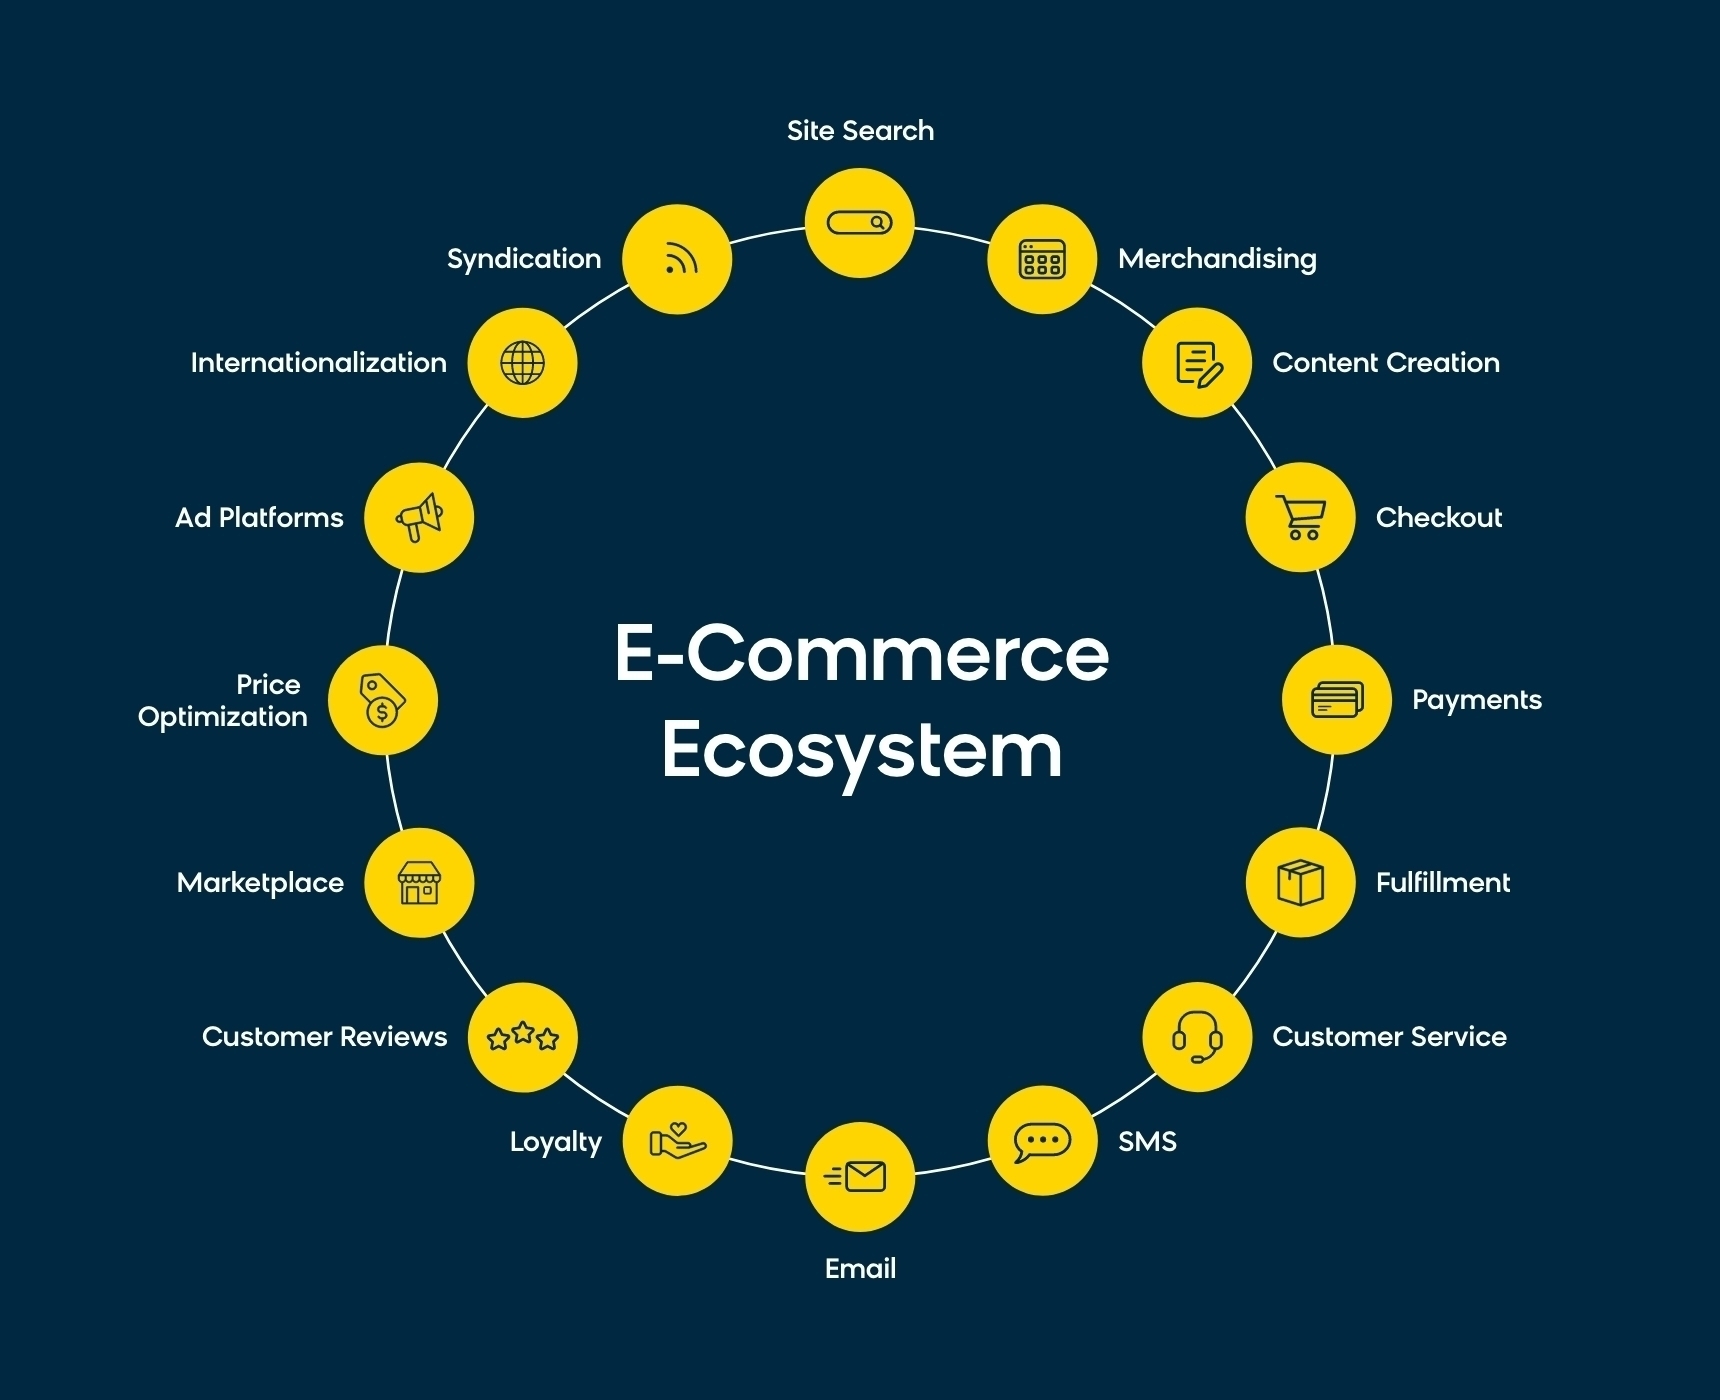 E-Commerce Ecosystem